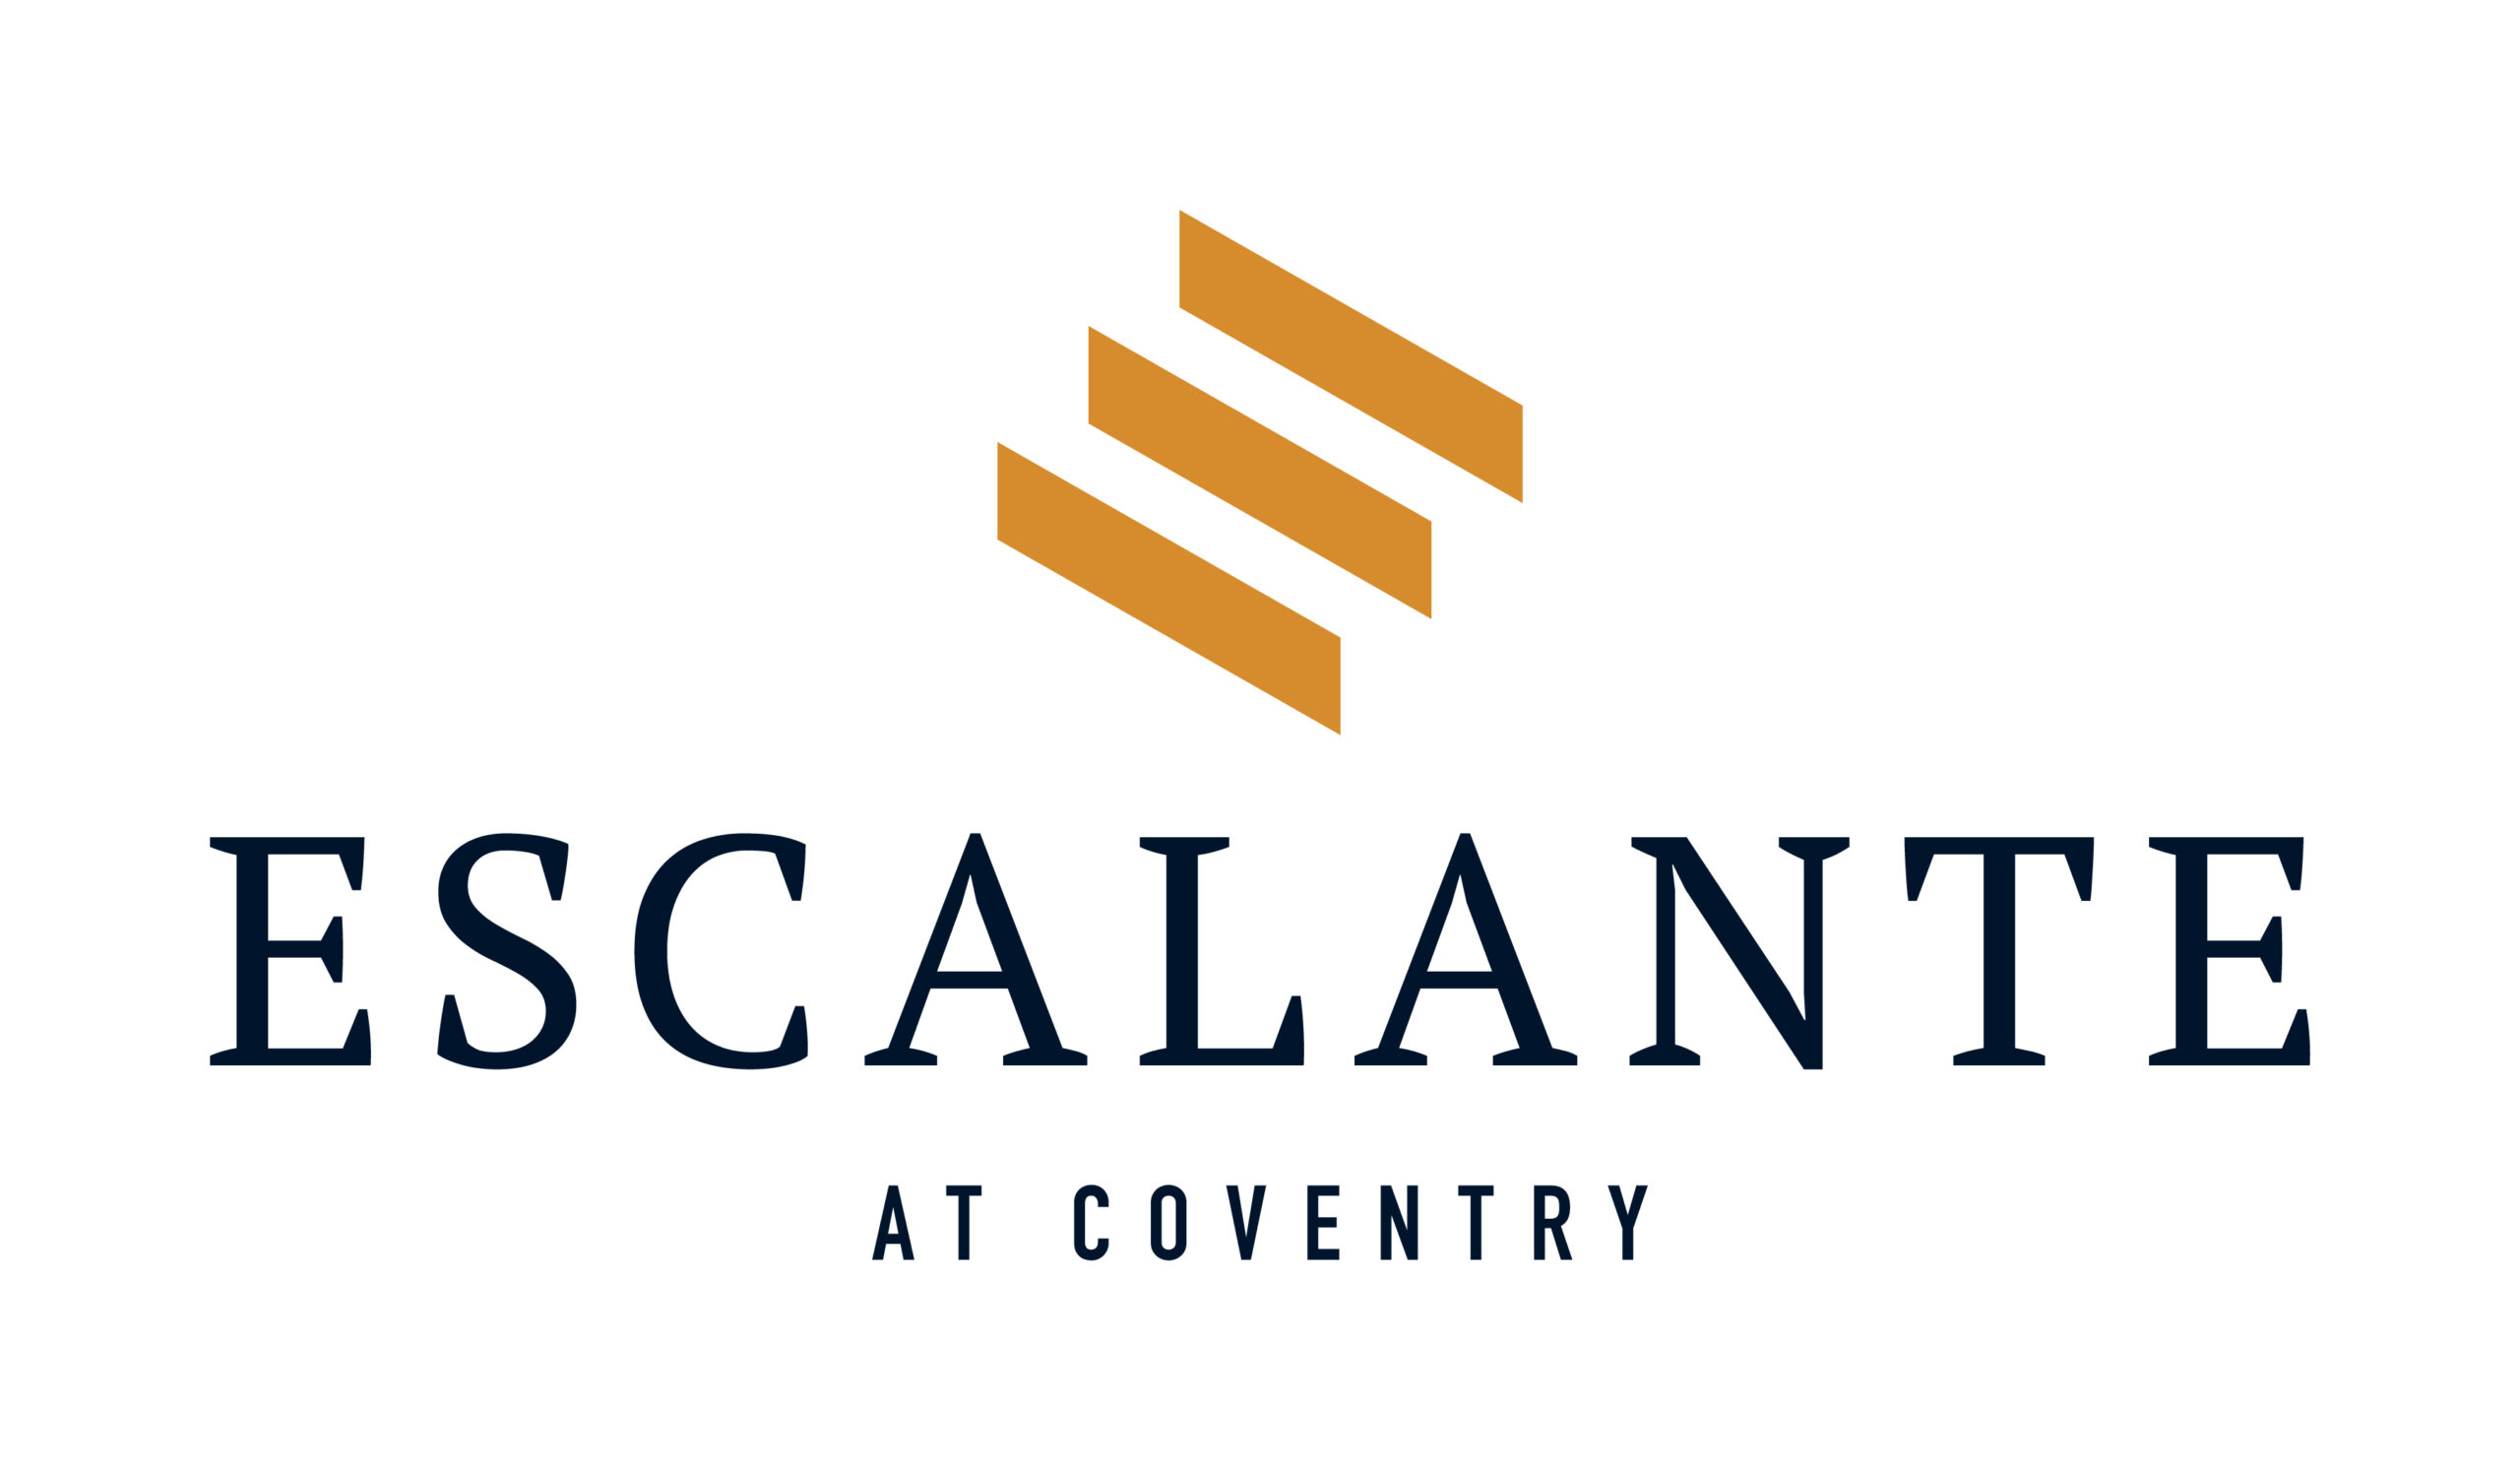 Escalante at the Coventry